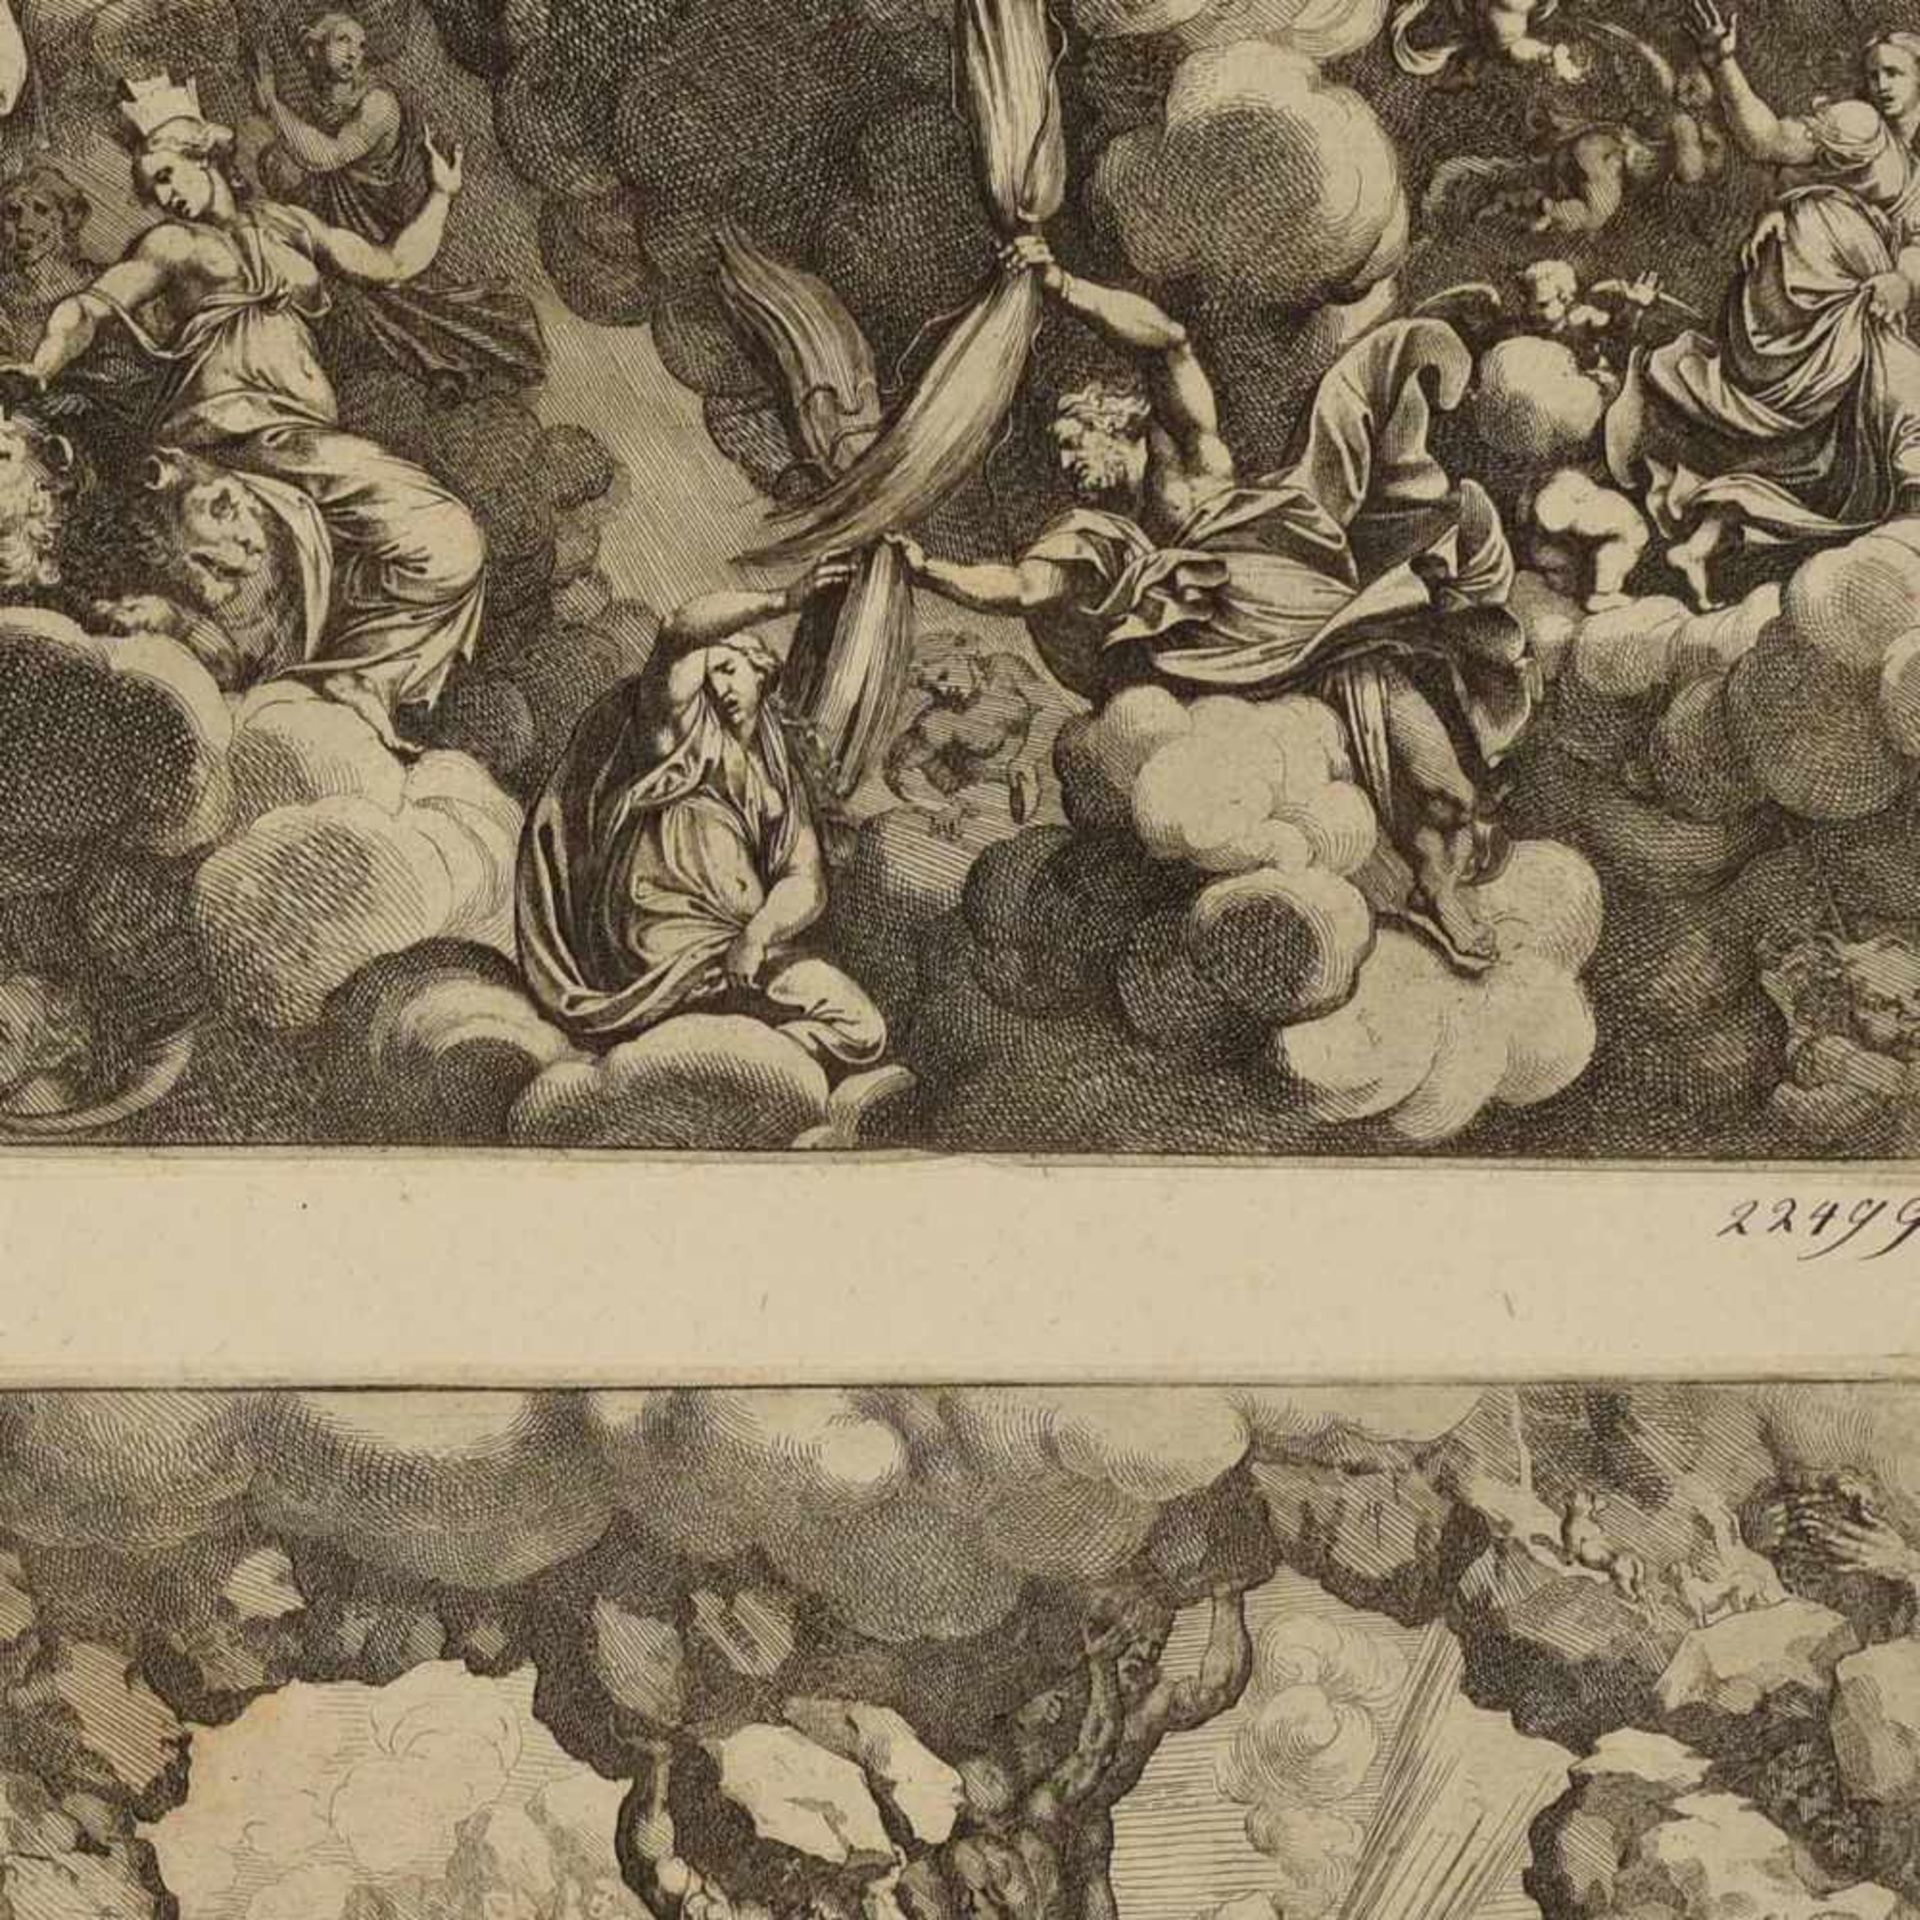 Bartoli, Pietro Santi (1635 Perugia - 1700 Rom) 3 Kupferstiche, barocke Reproduktionsstiche nach den